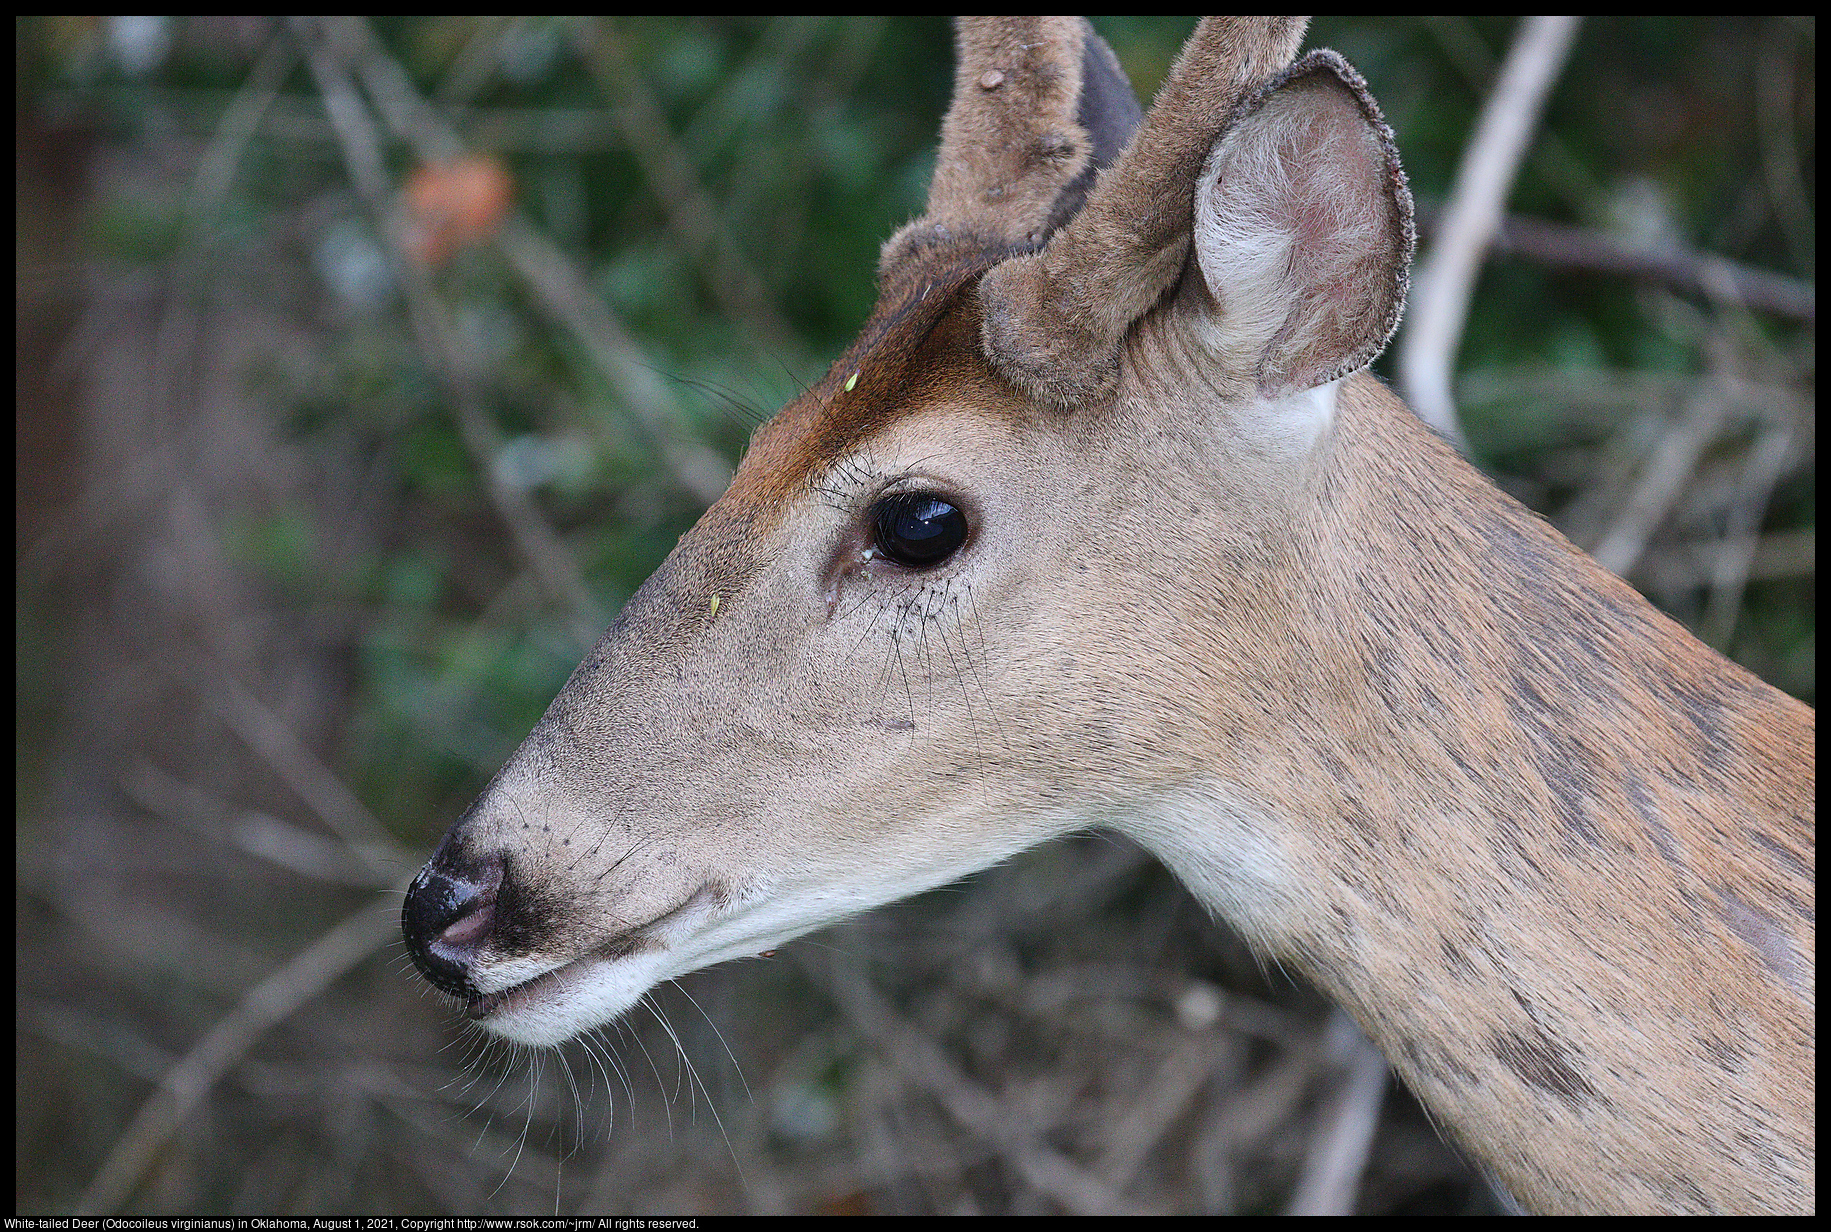 White-tailed Deer (Odocoileus virginianus) in Oklahoma, August 1, 2021